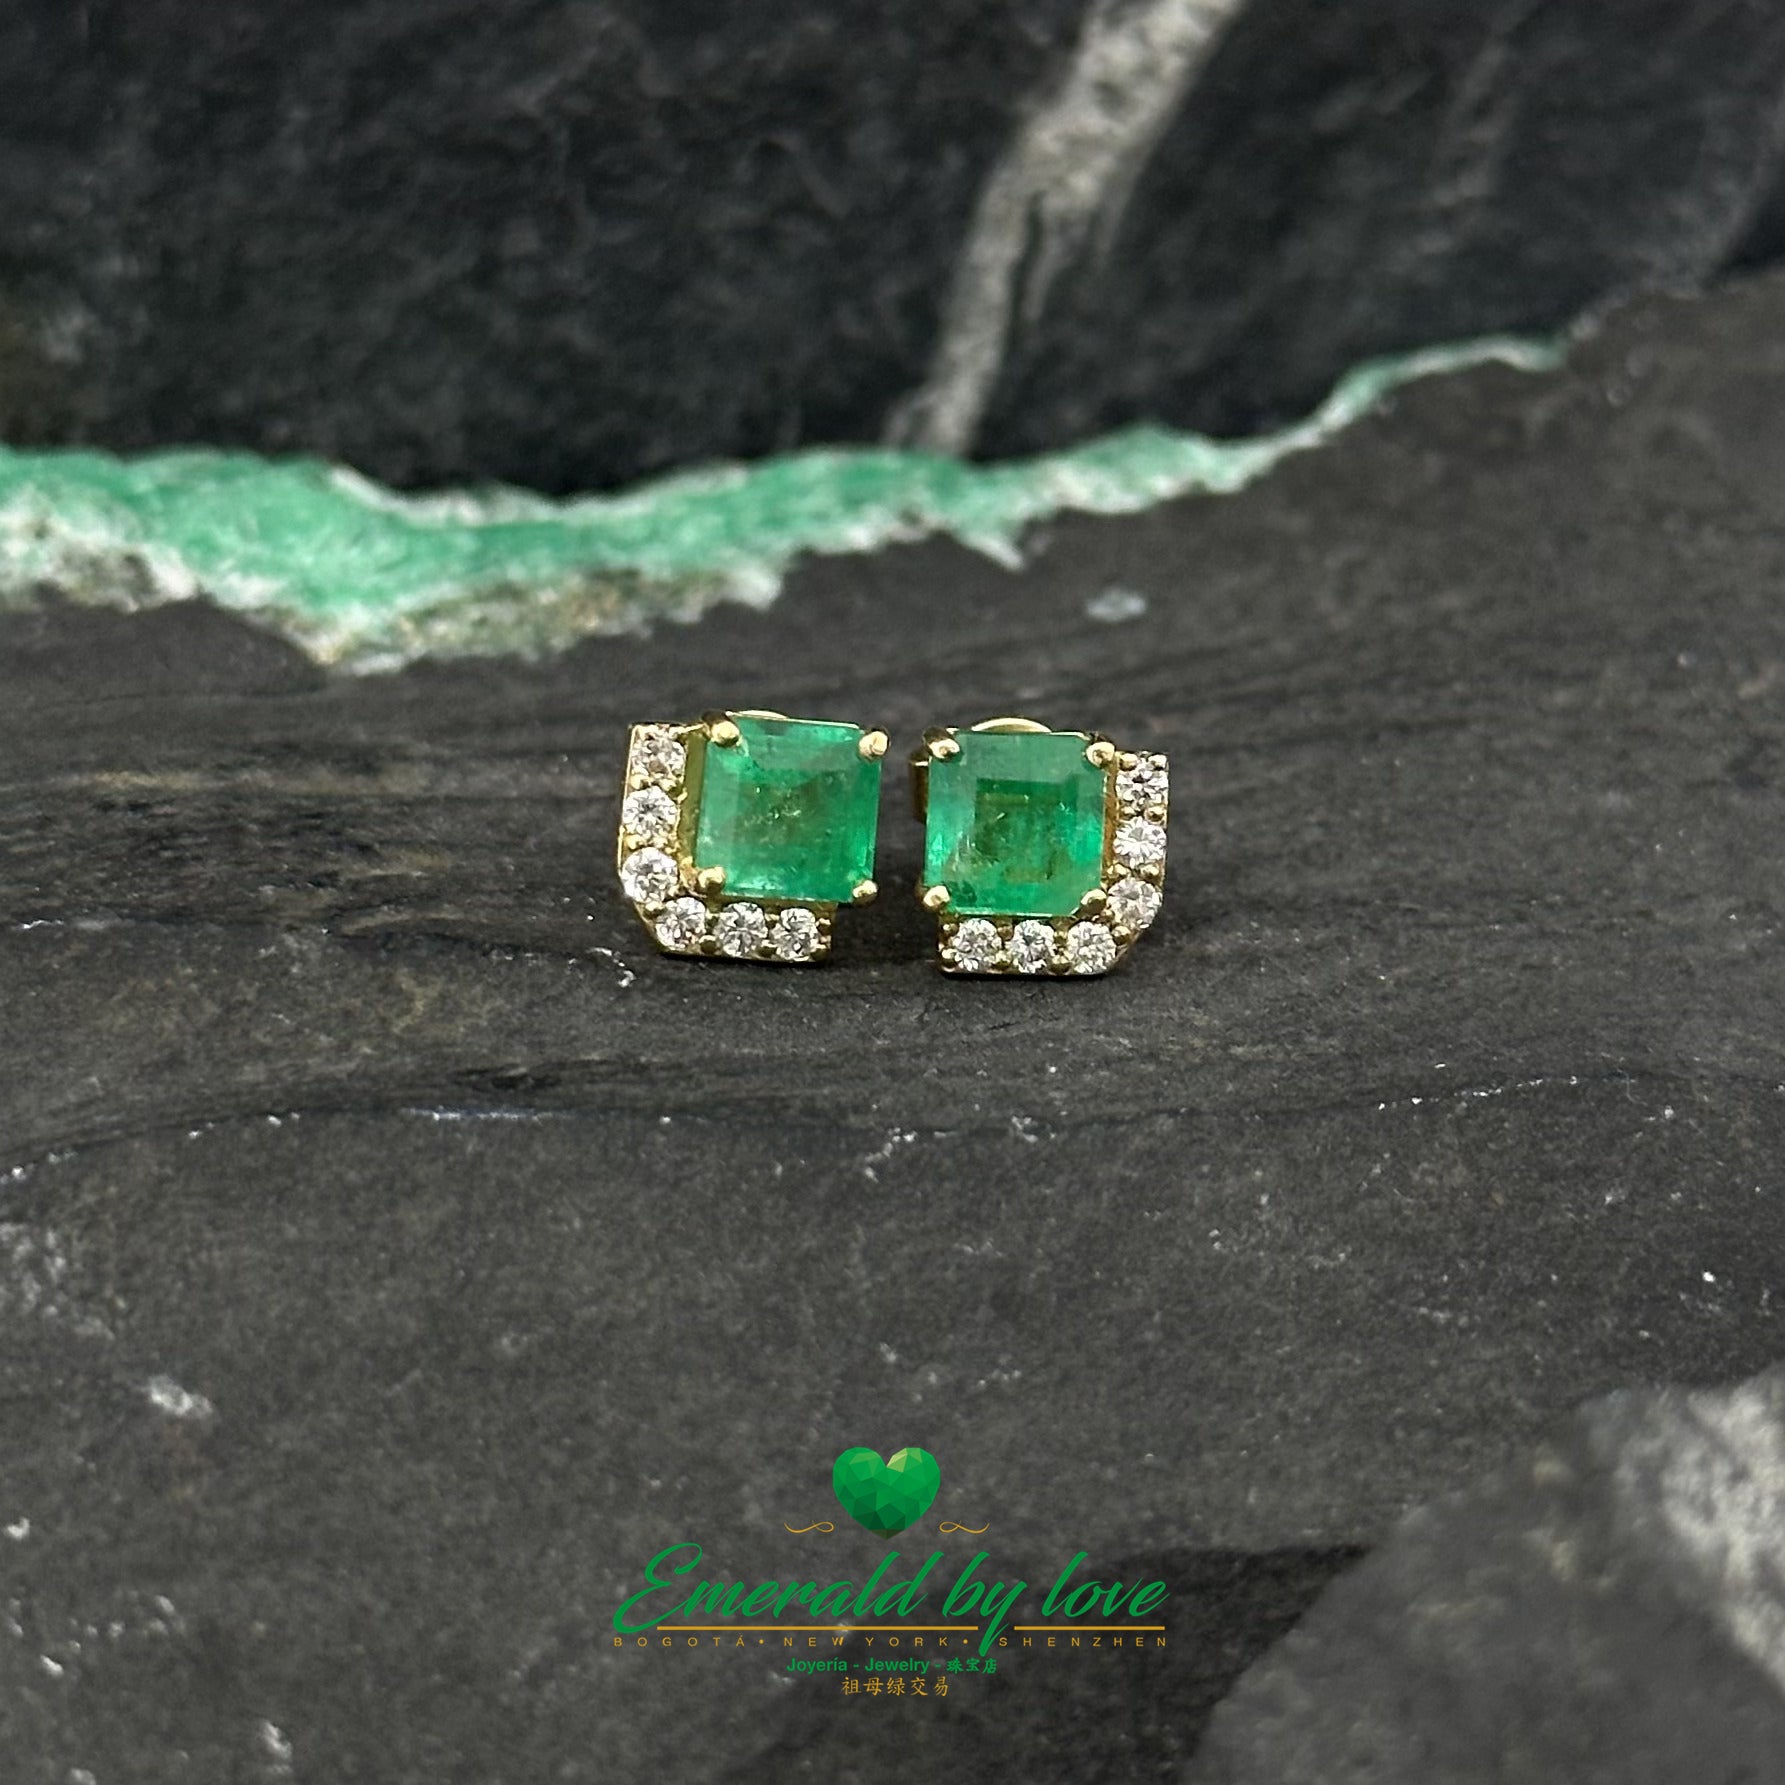 Minimalist Yellow Gold Earrings: 1.45 TCW Colombian Emeralds and 0.18 TCW Diamonds